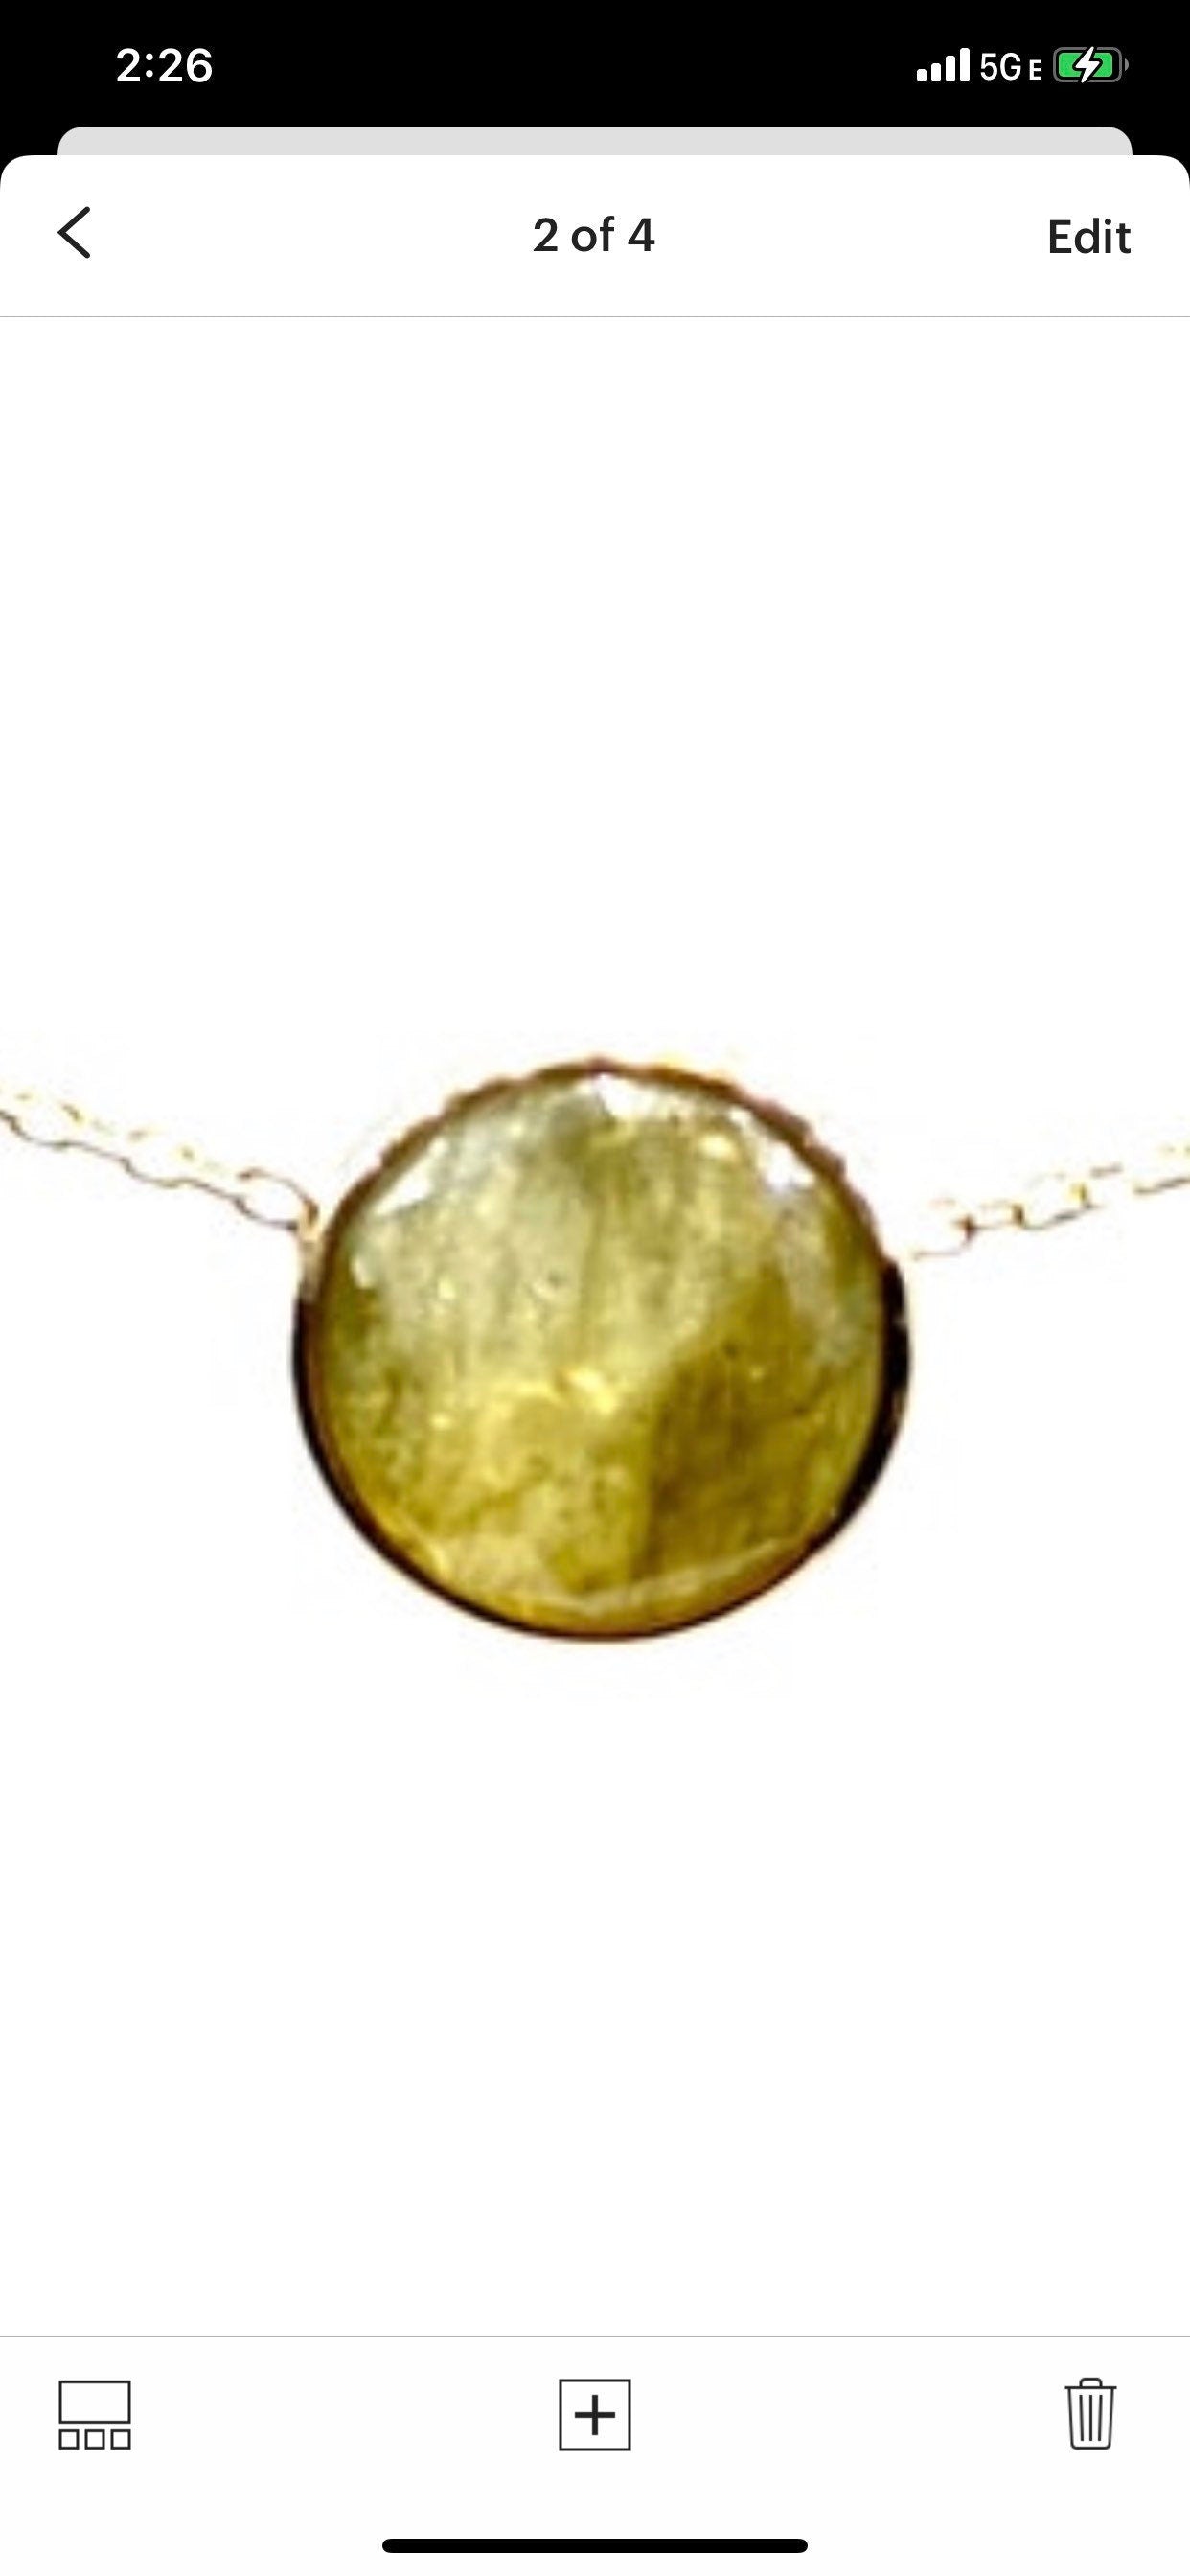 Yellow Gold Round Cut Labradorite Bezel Chain Adjustable Necklace